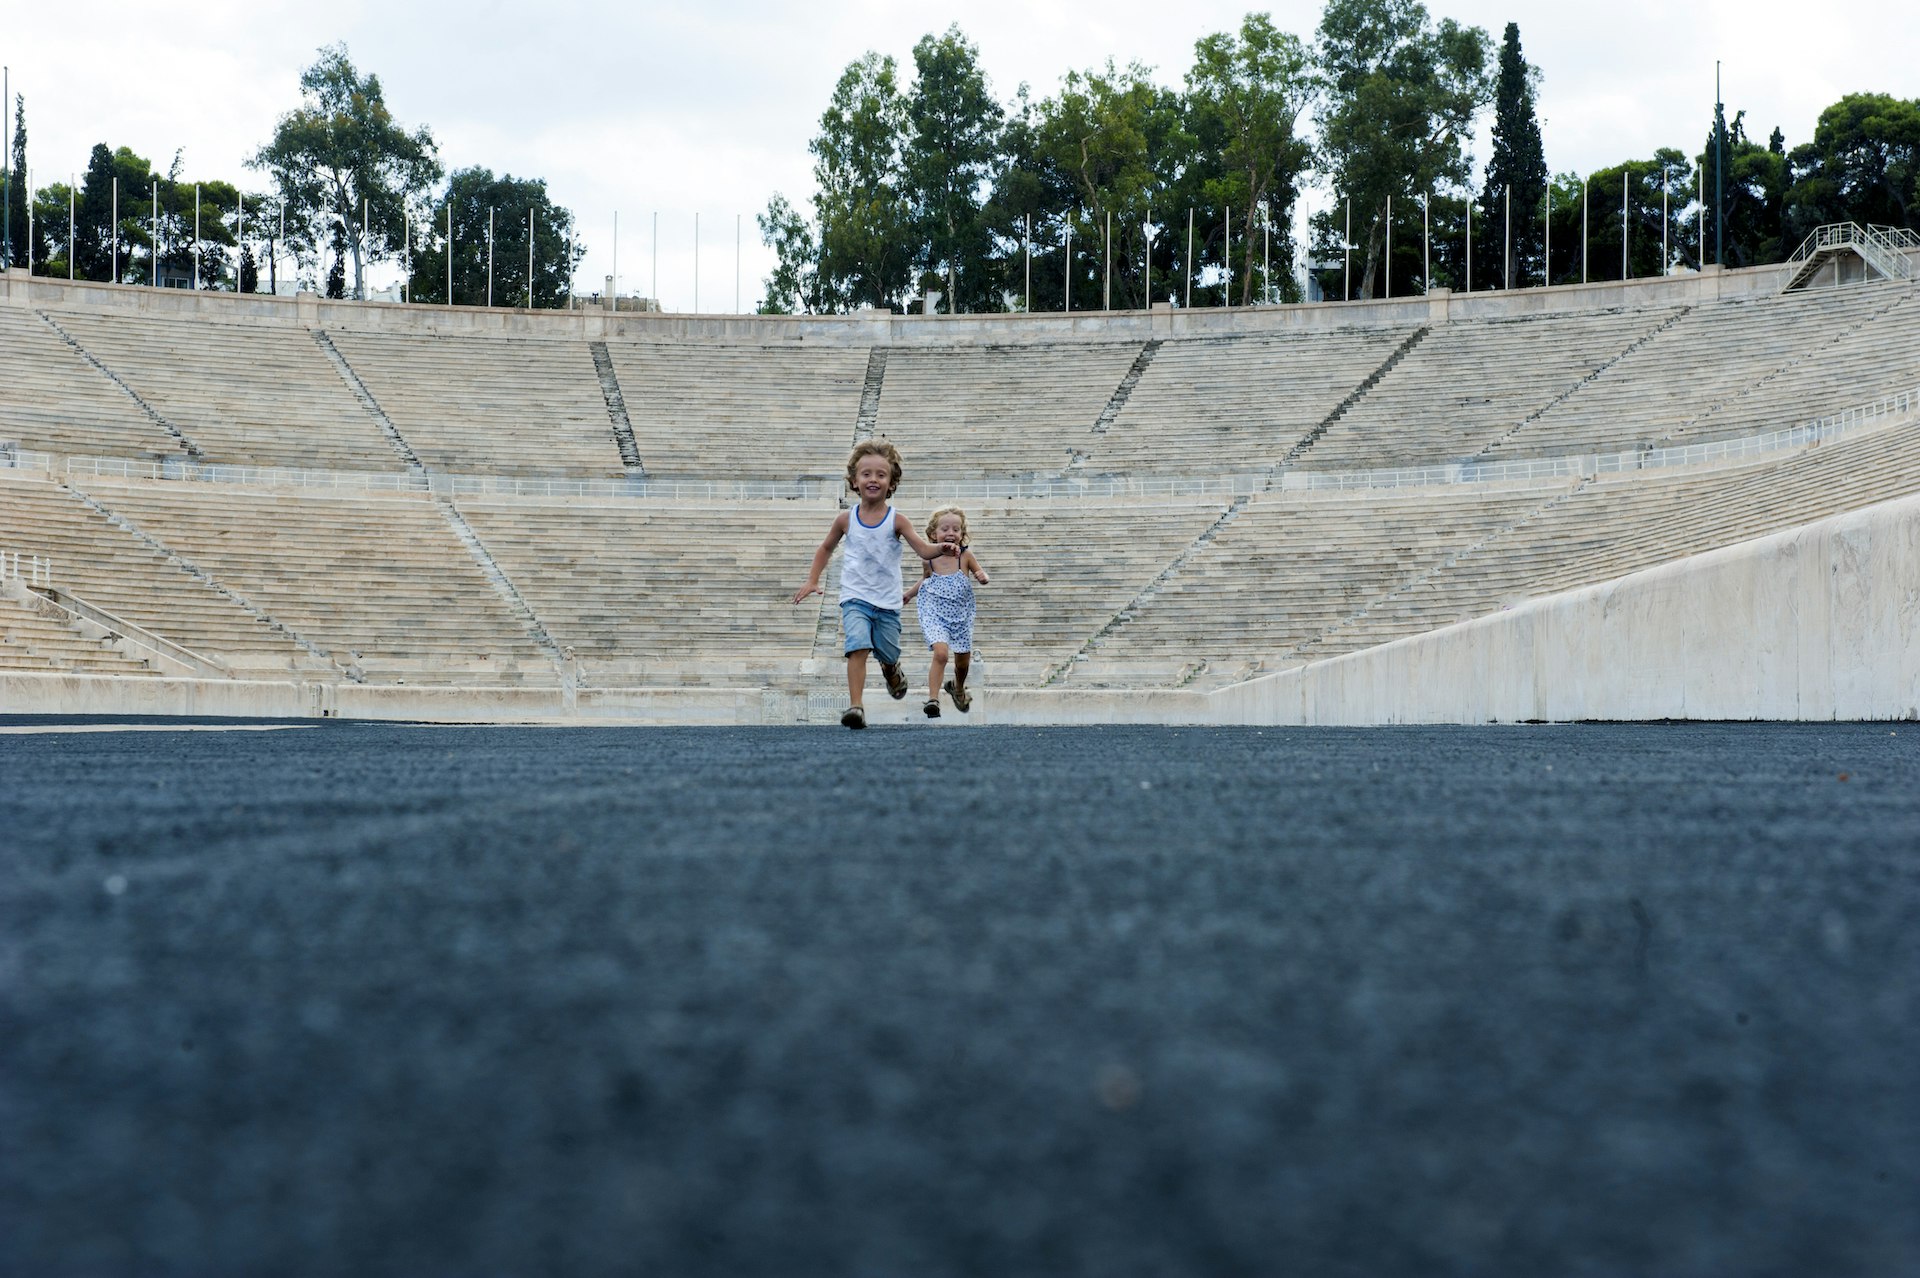 Two children run in the Panathenaic Stadium, Athens, Greece